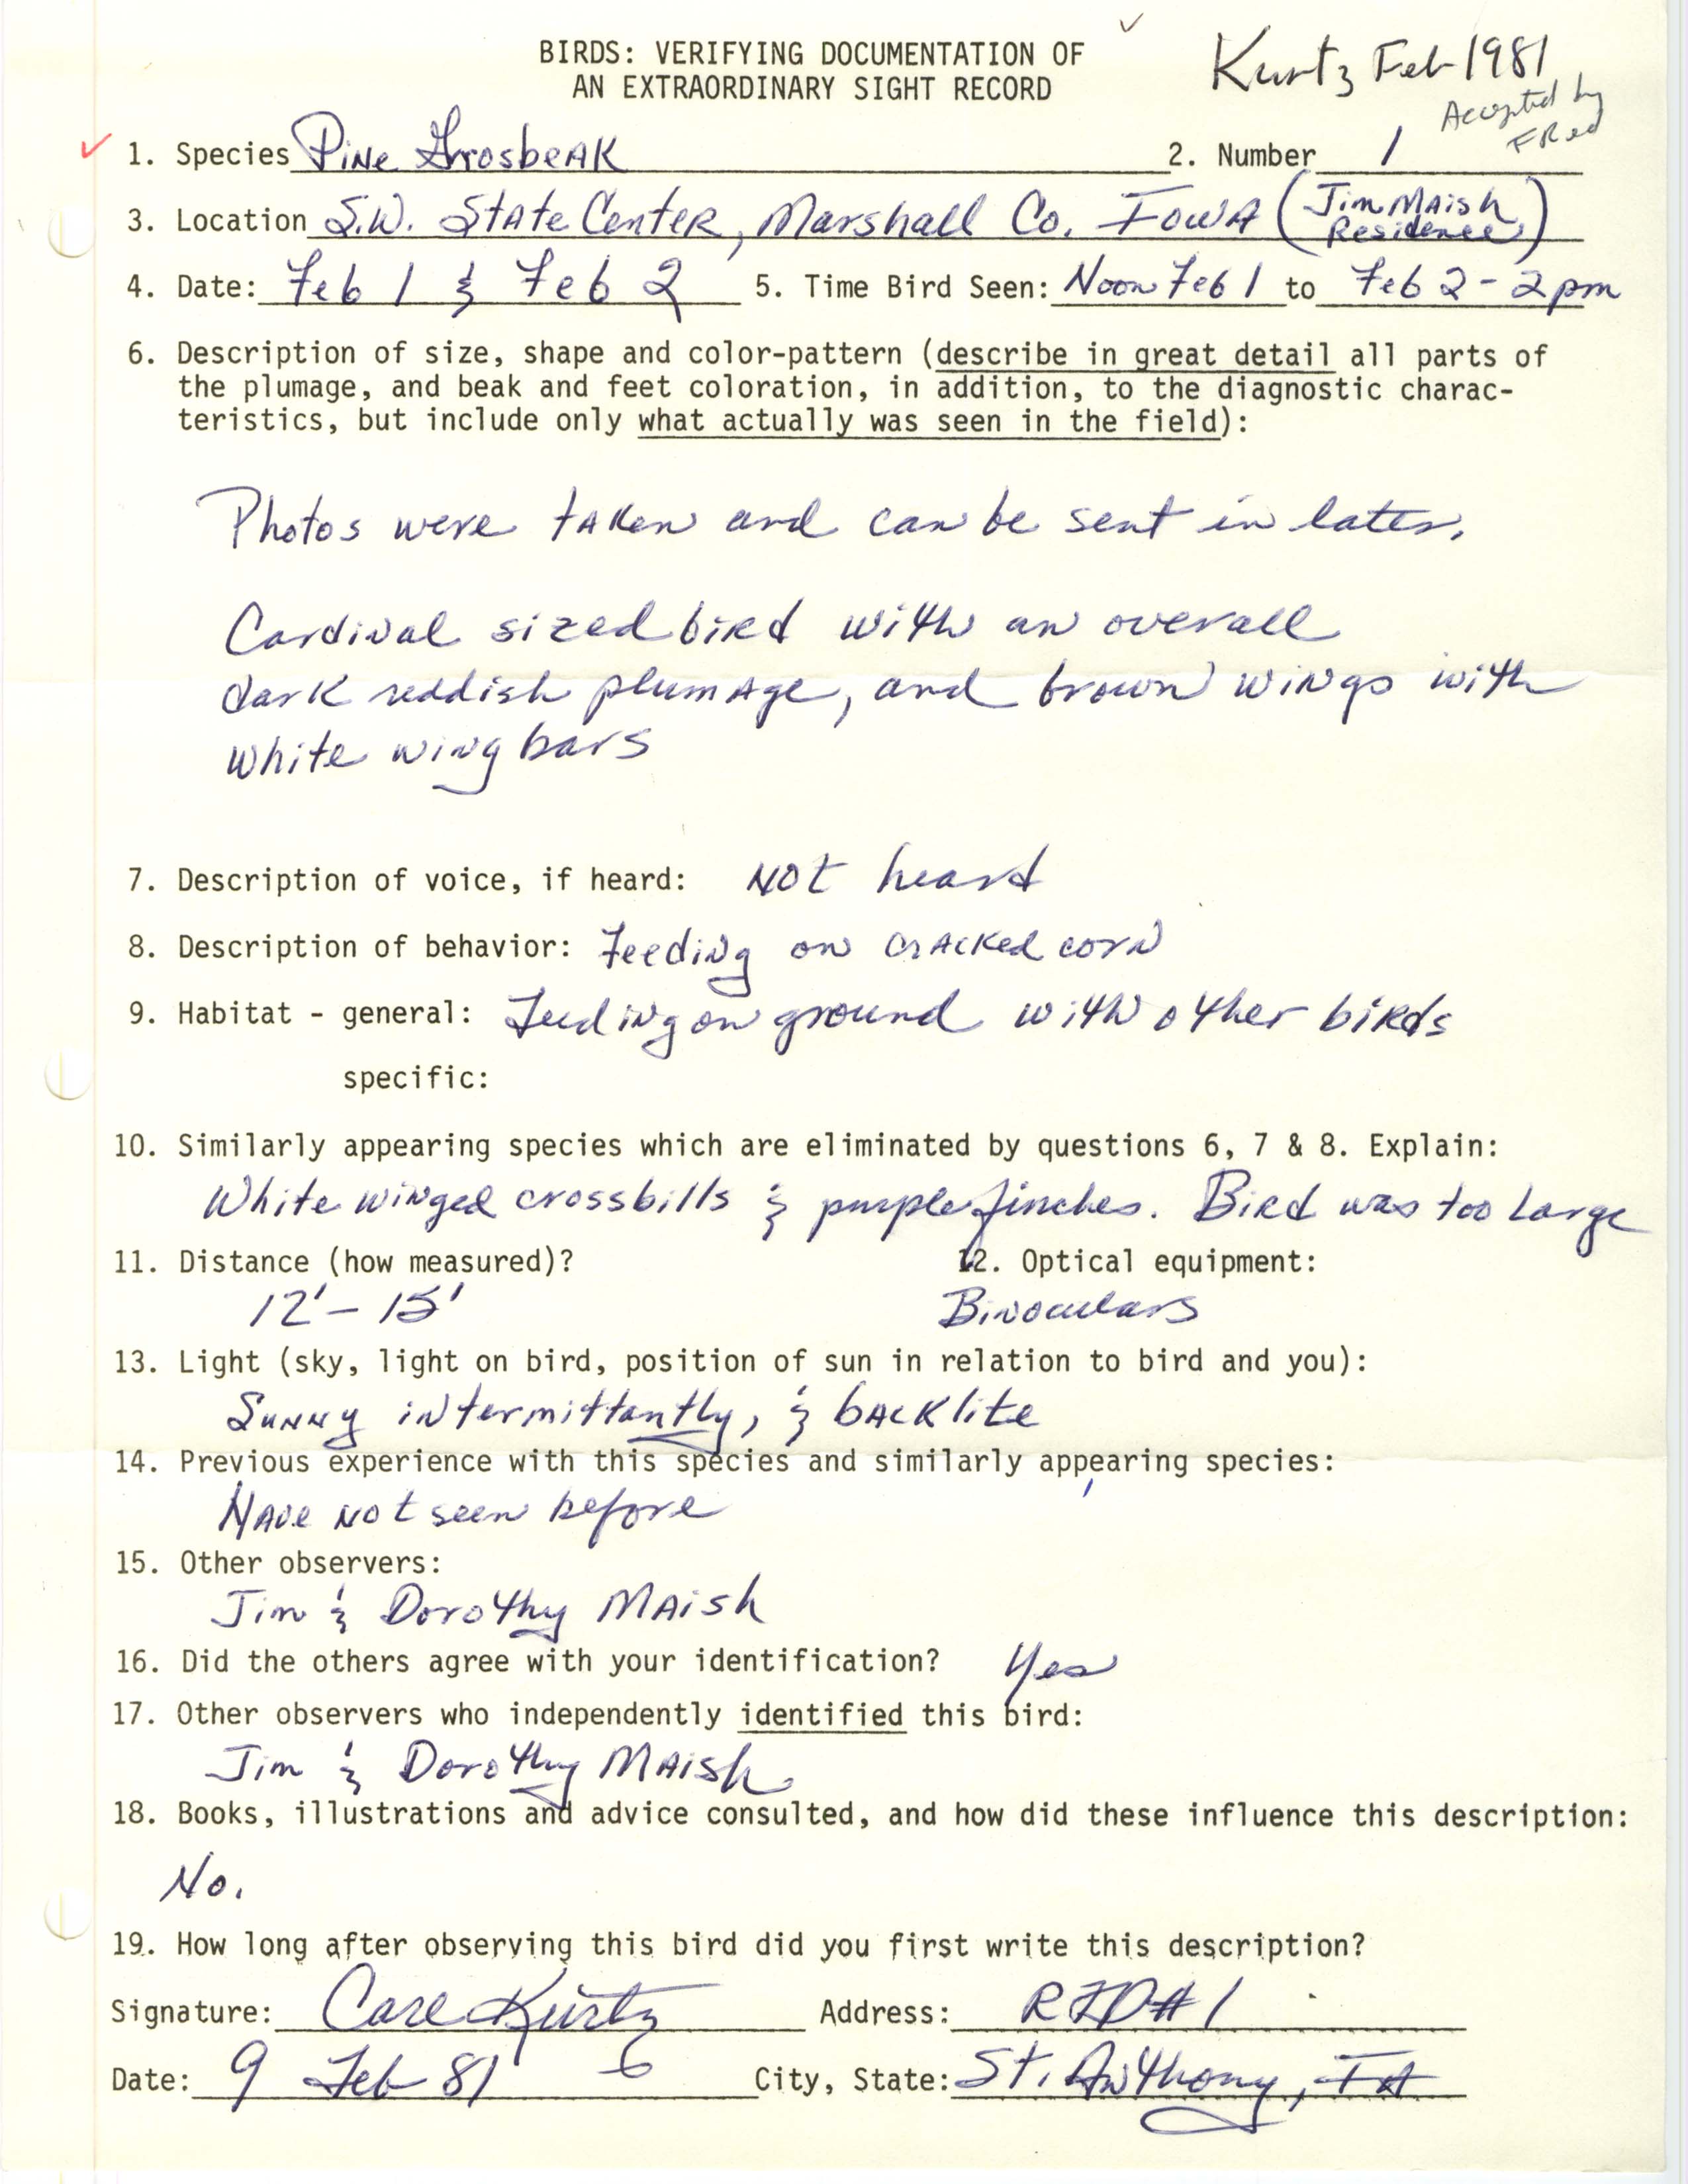 Rare bird documentation form for Pine Grosbeak at State Center in 1981